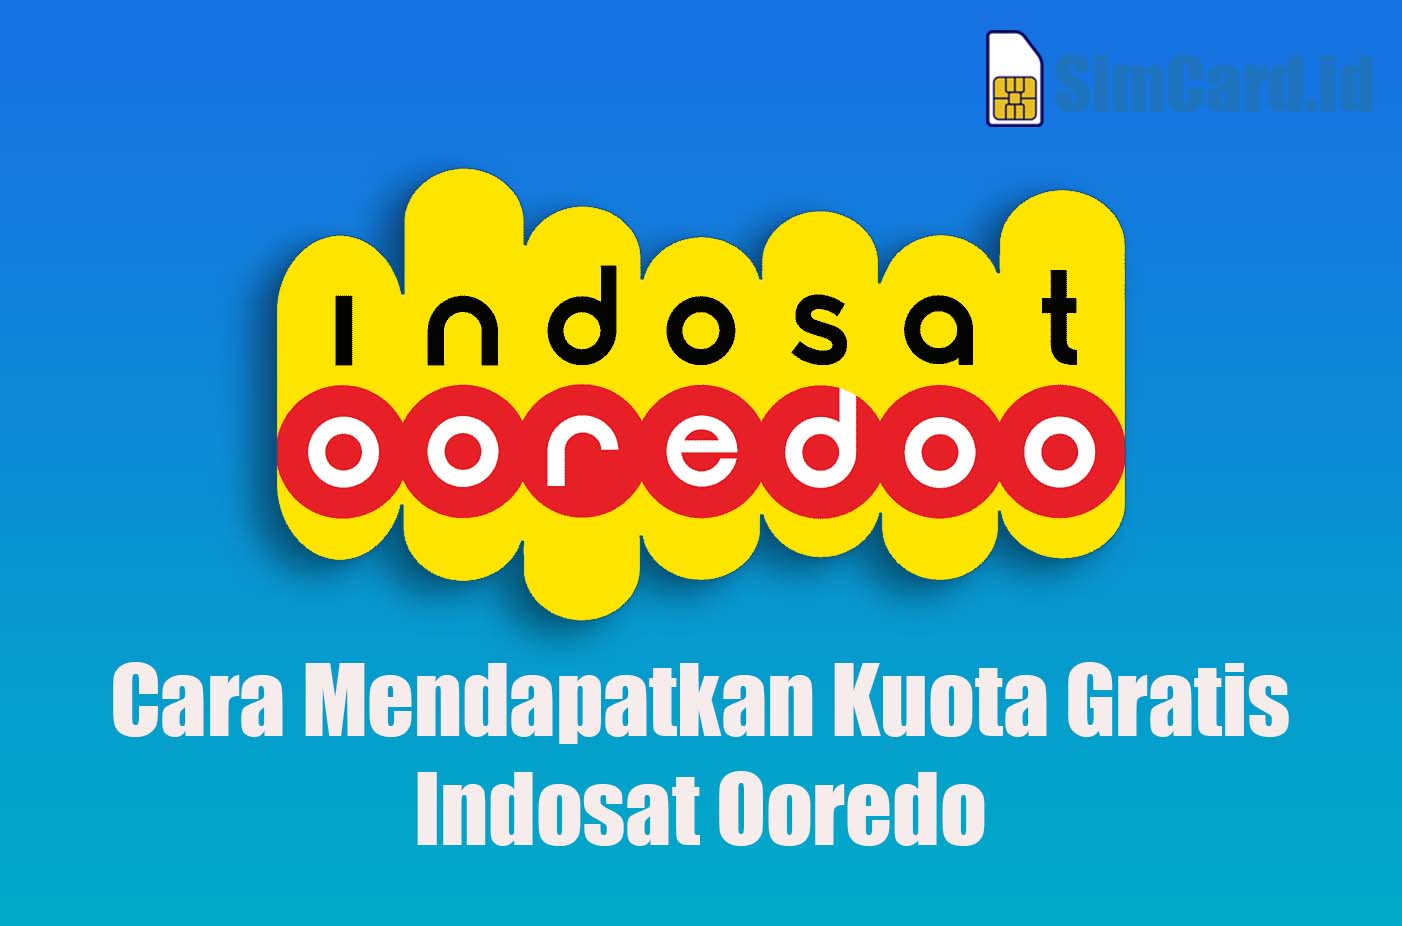 Cara Mendapatkan Kuota Gratis Indosat Ooredo